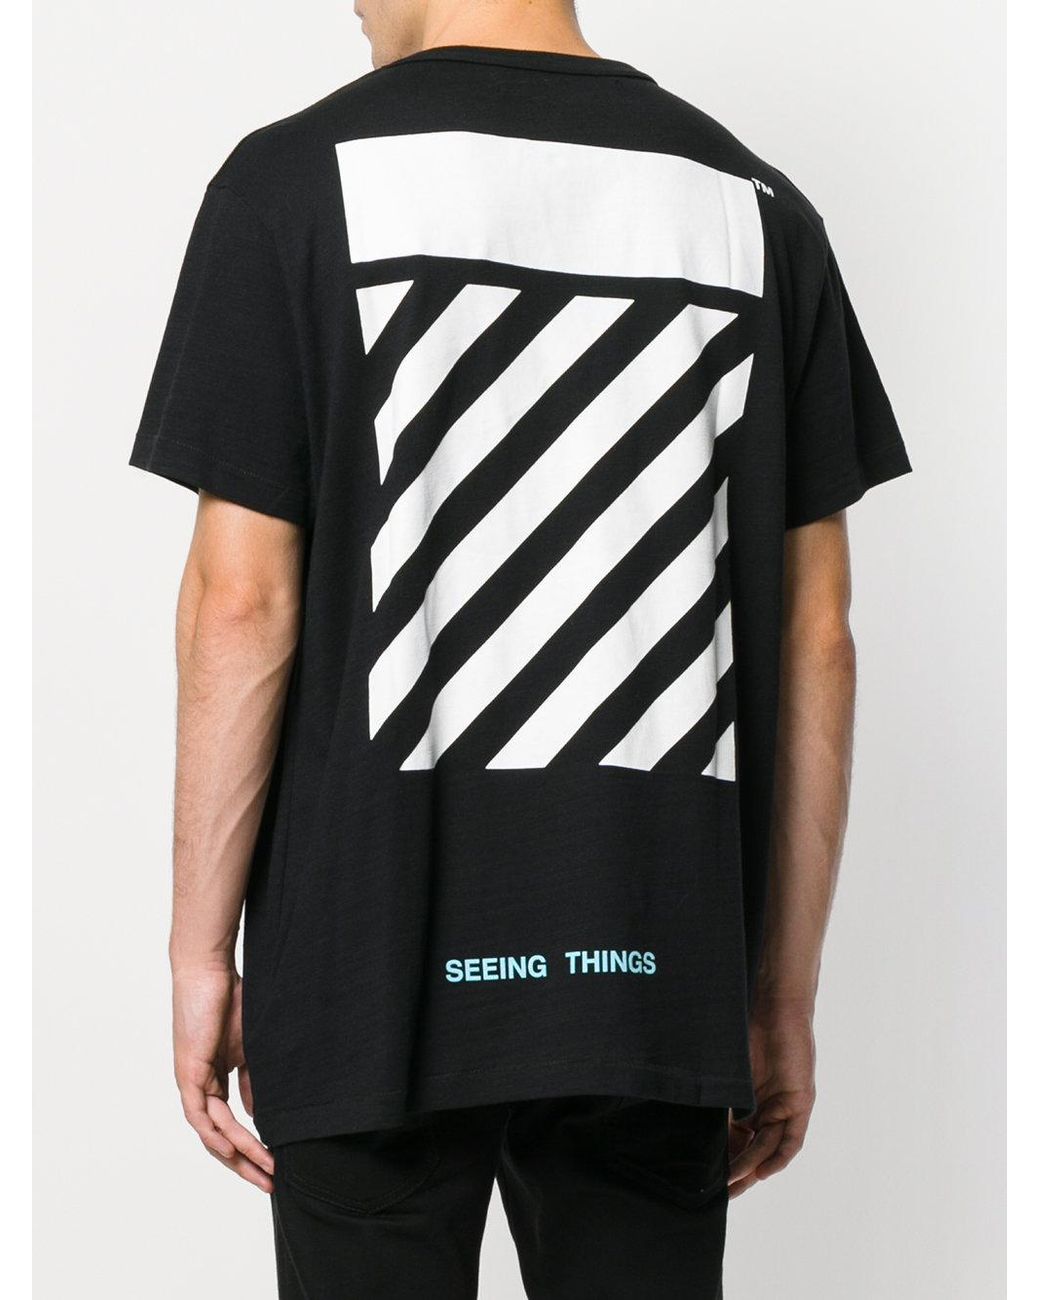 Off-White Virgil Abloh Seeing Things T-shirt in Black for Men | Lyst